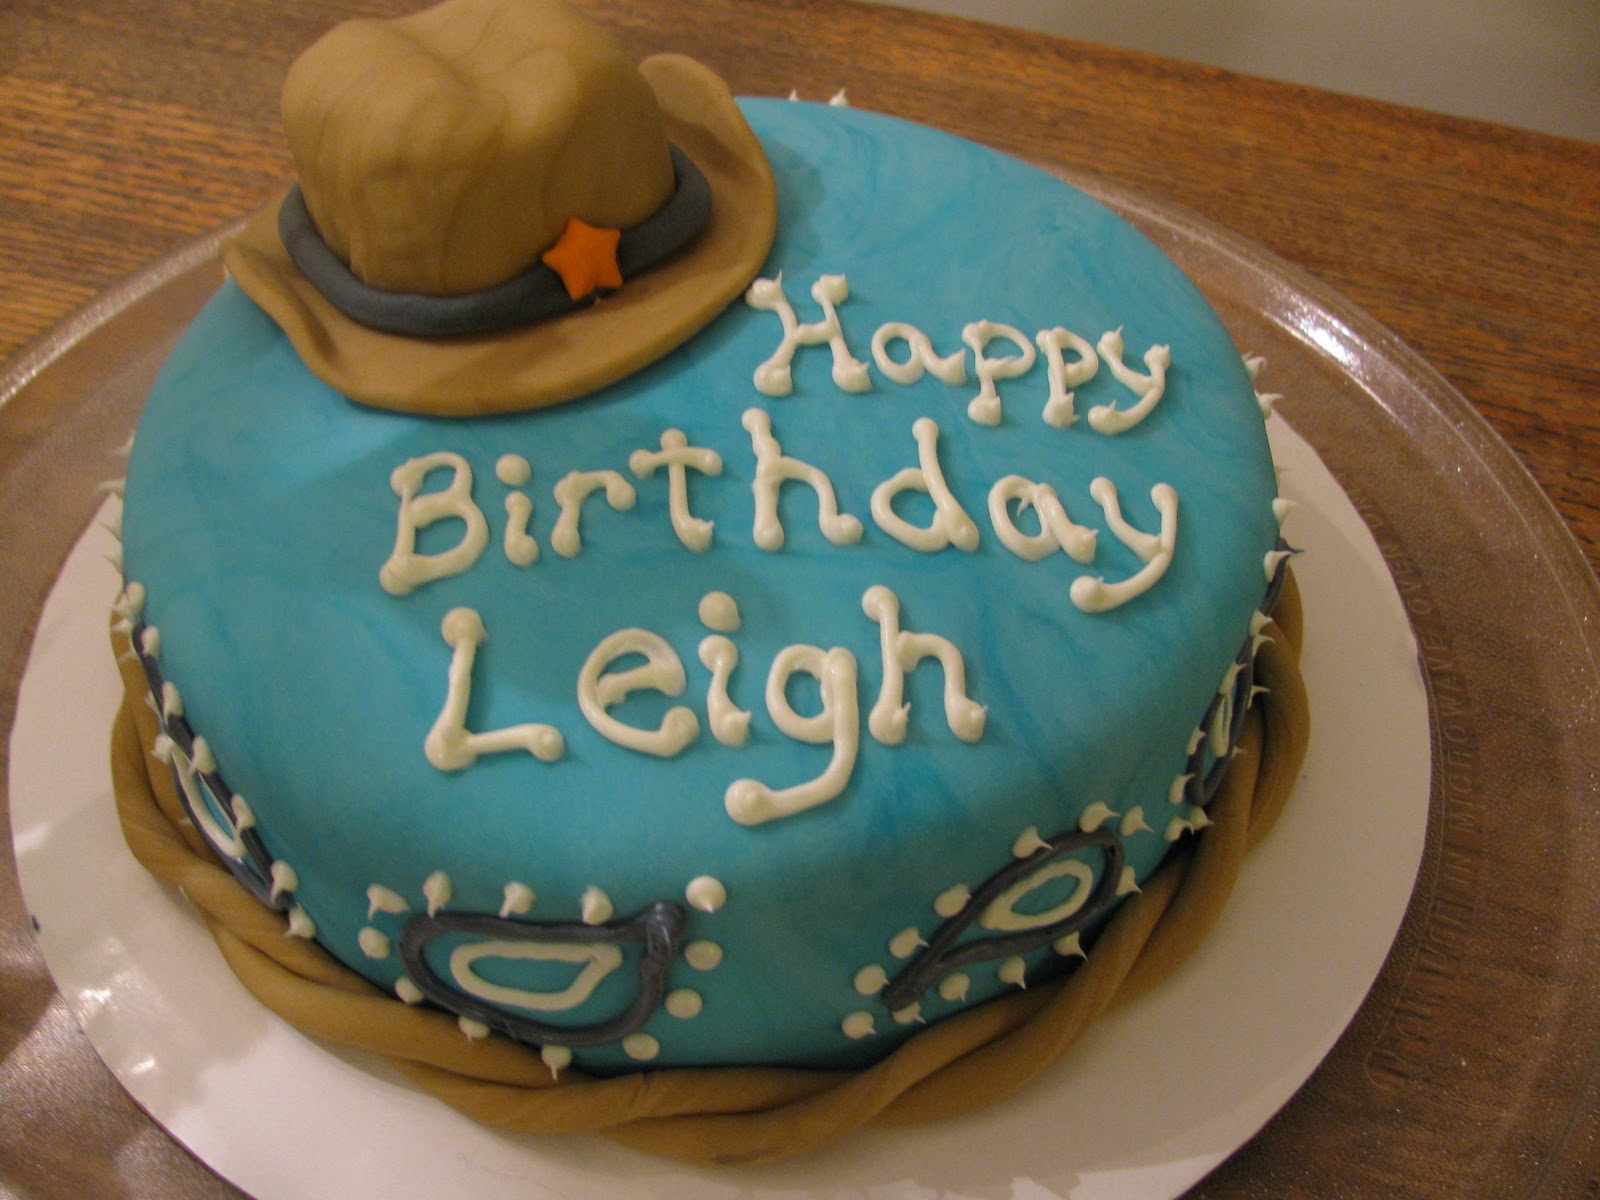 Happy Birthday Leigh